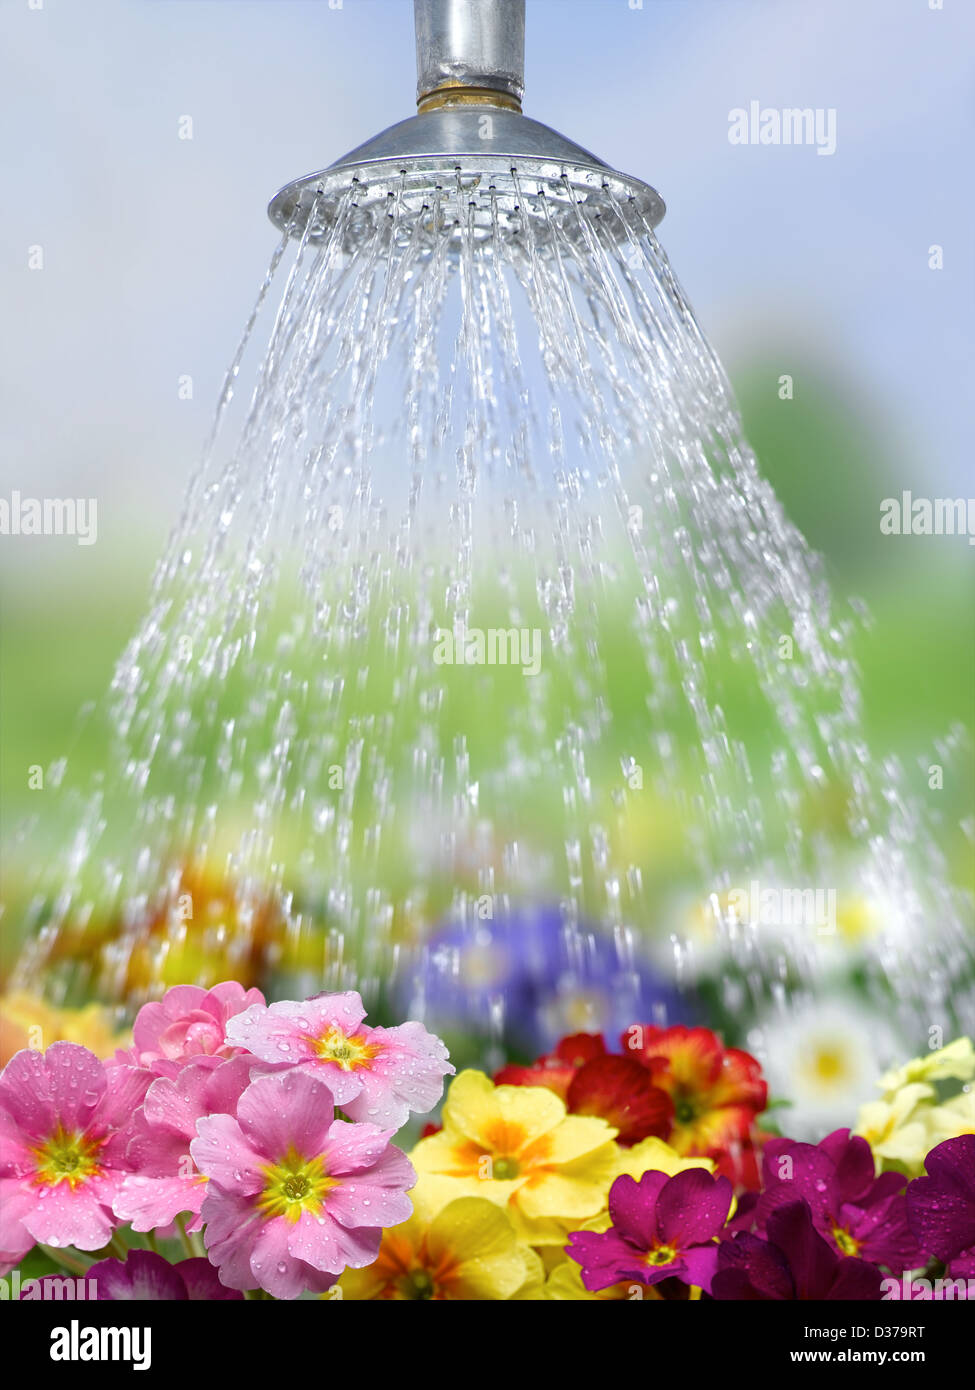 watering flowers Stock Photo